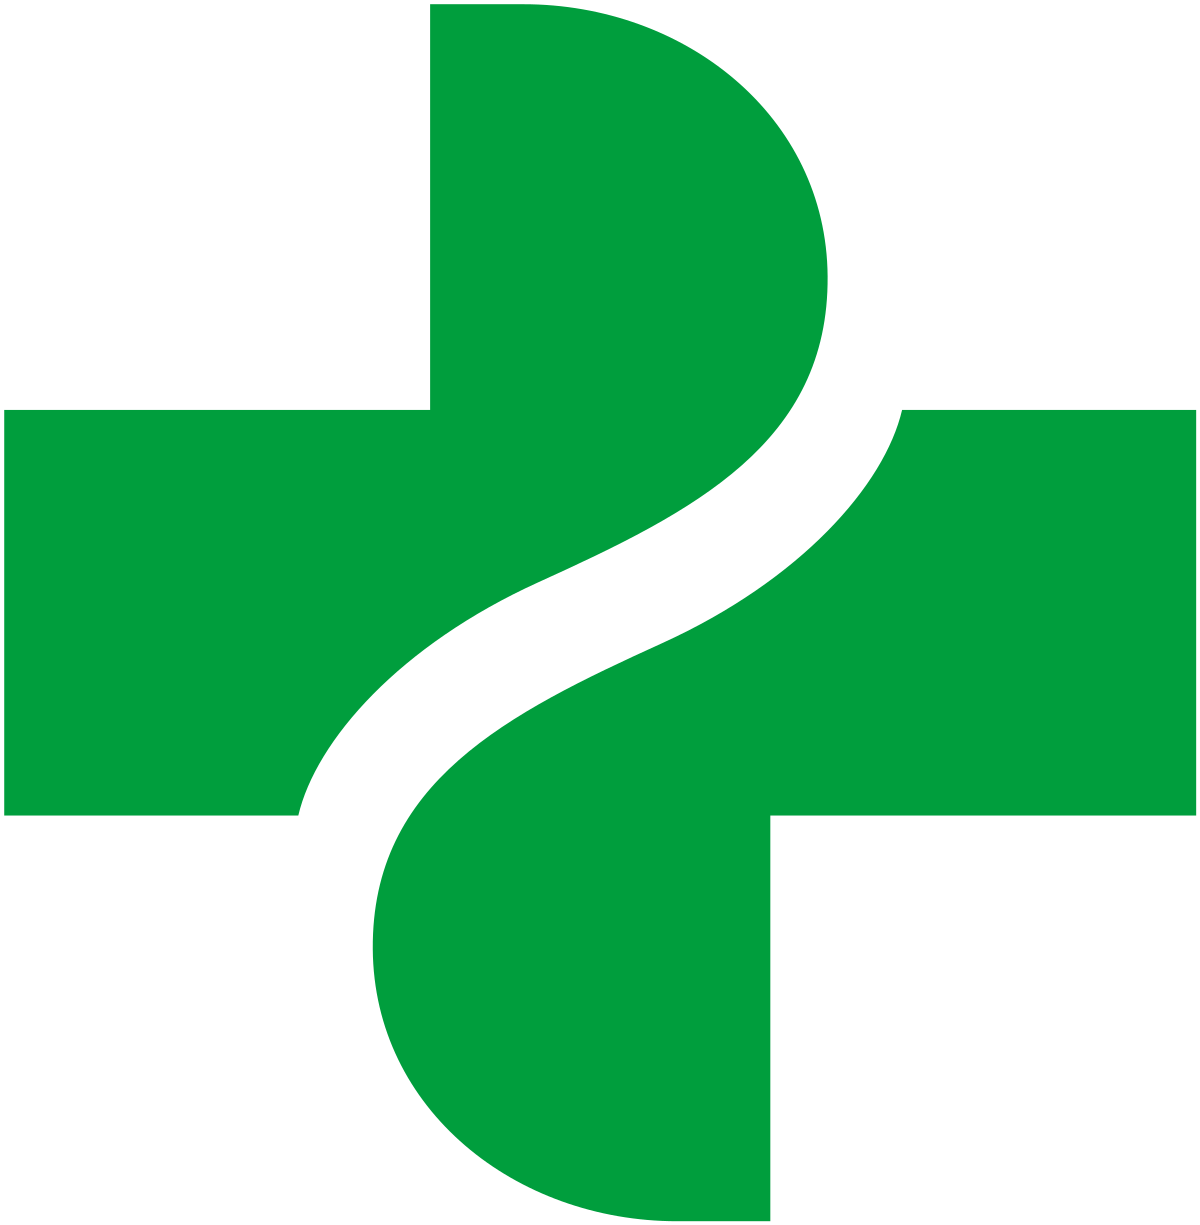 pharmacy symbol png